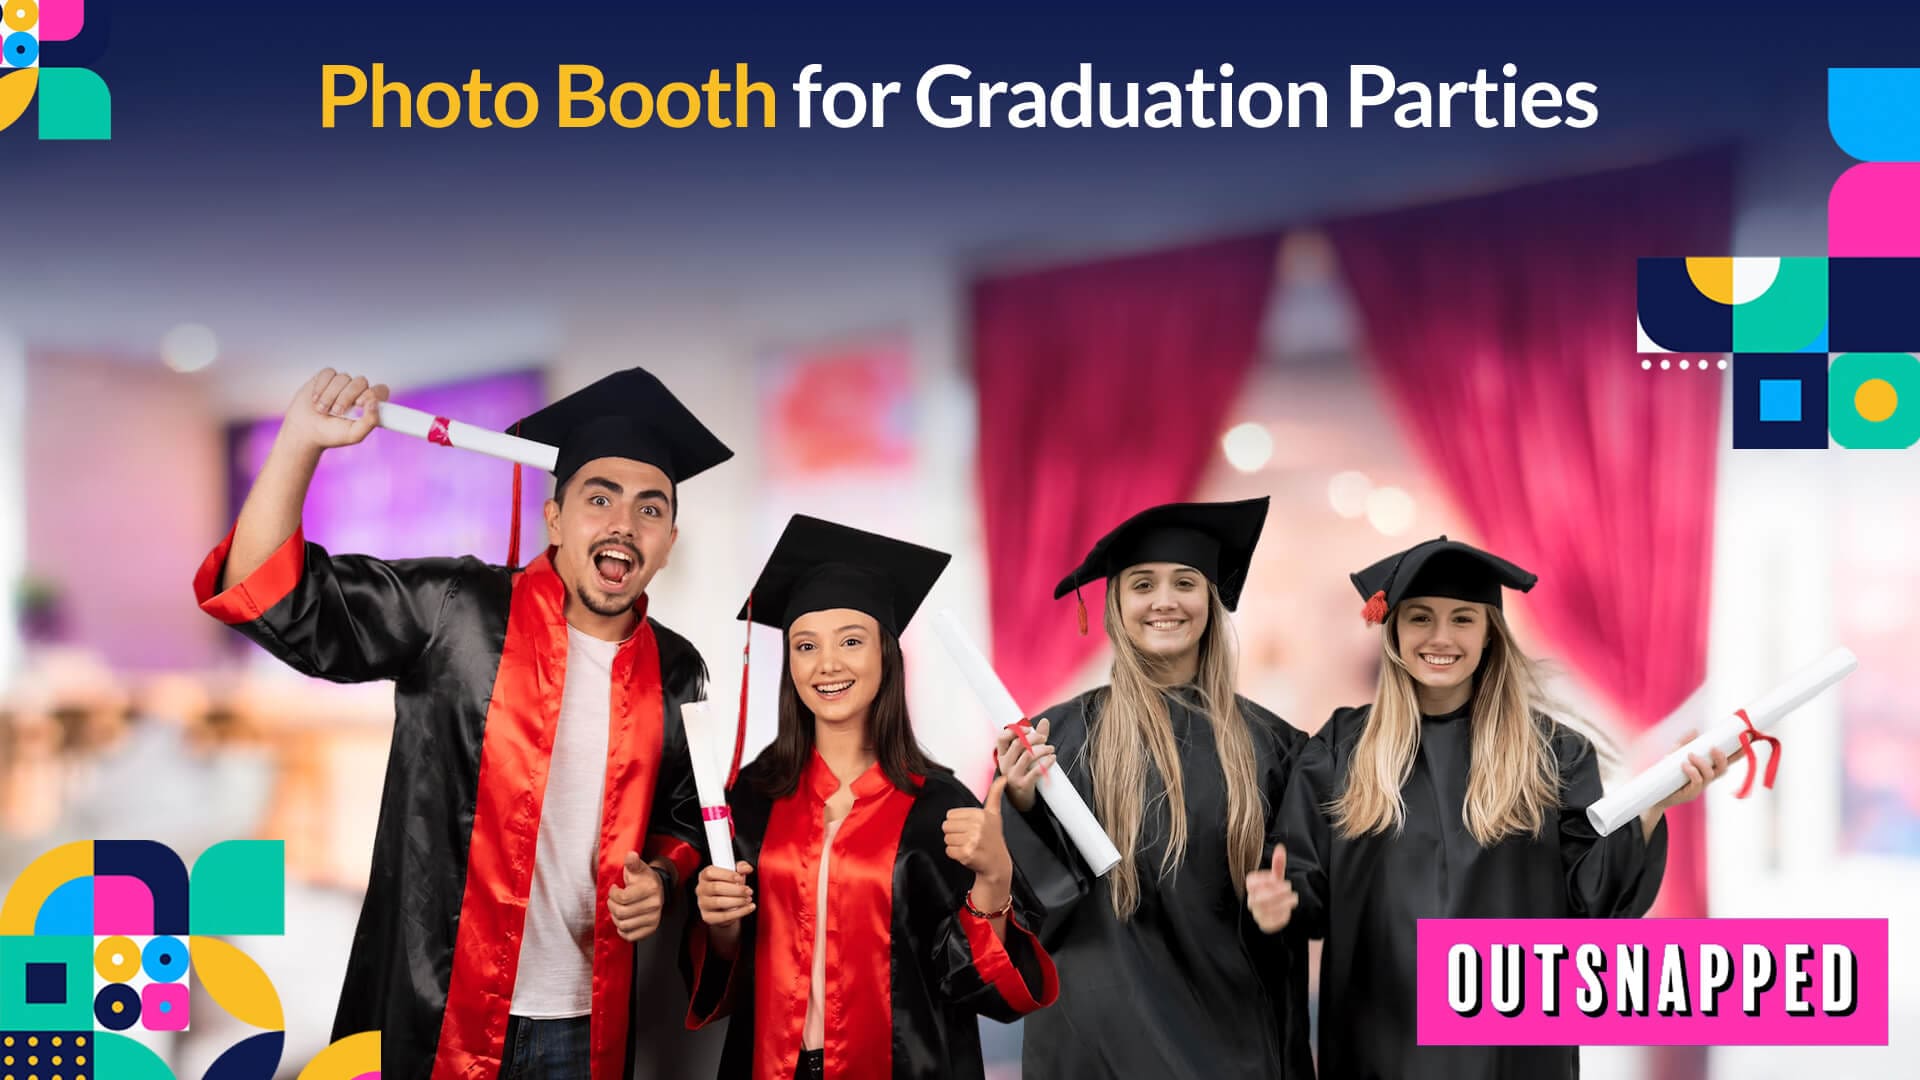 Graduation photo booth